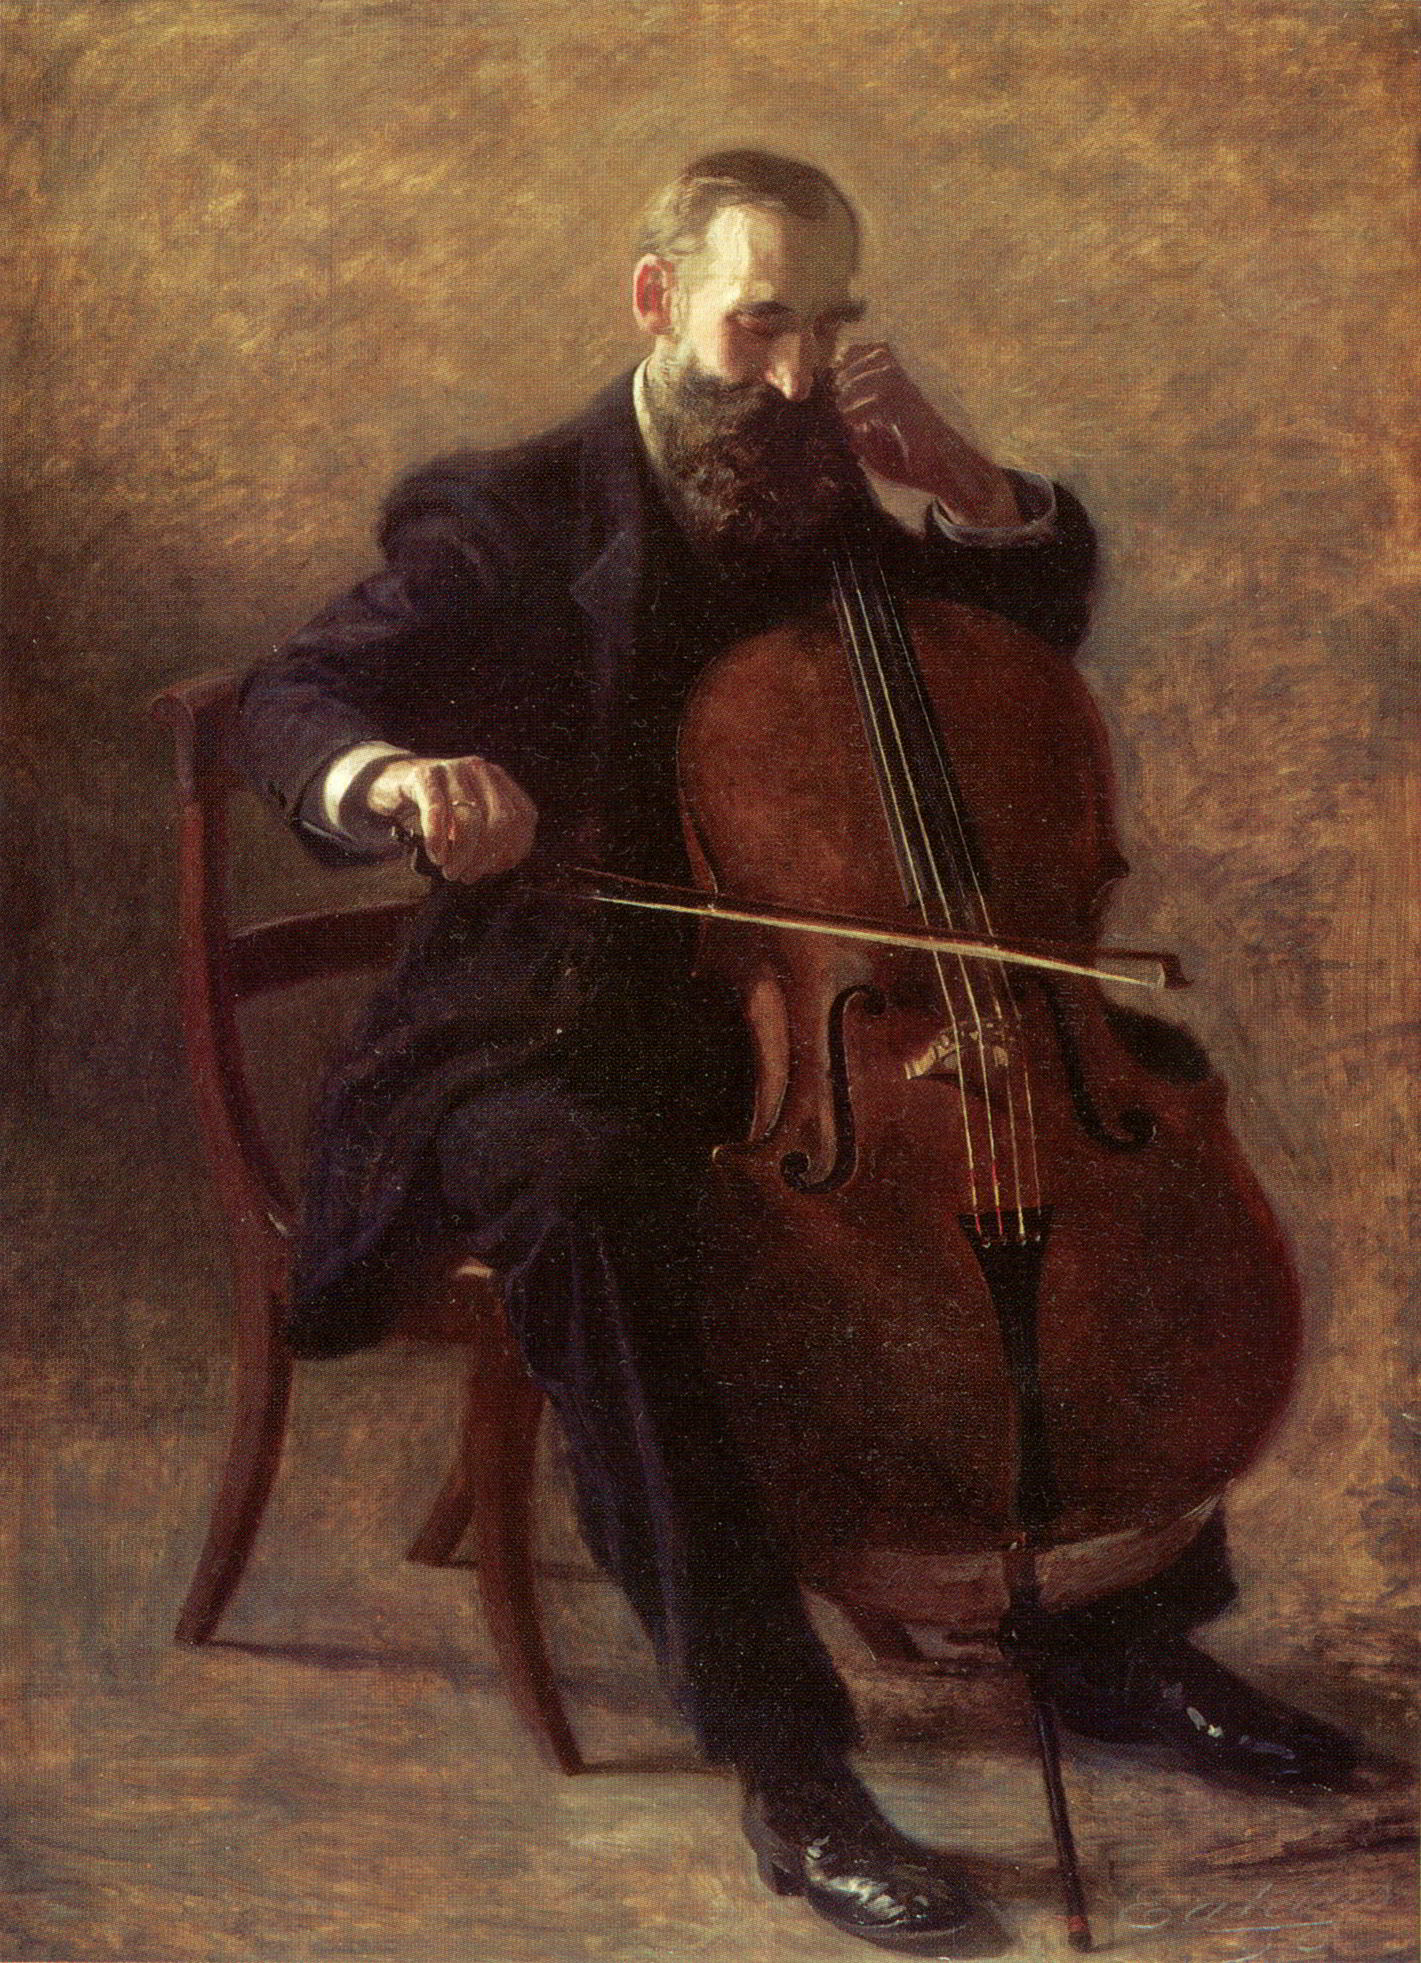 The Cello Player by Thomas Eakins